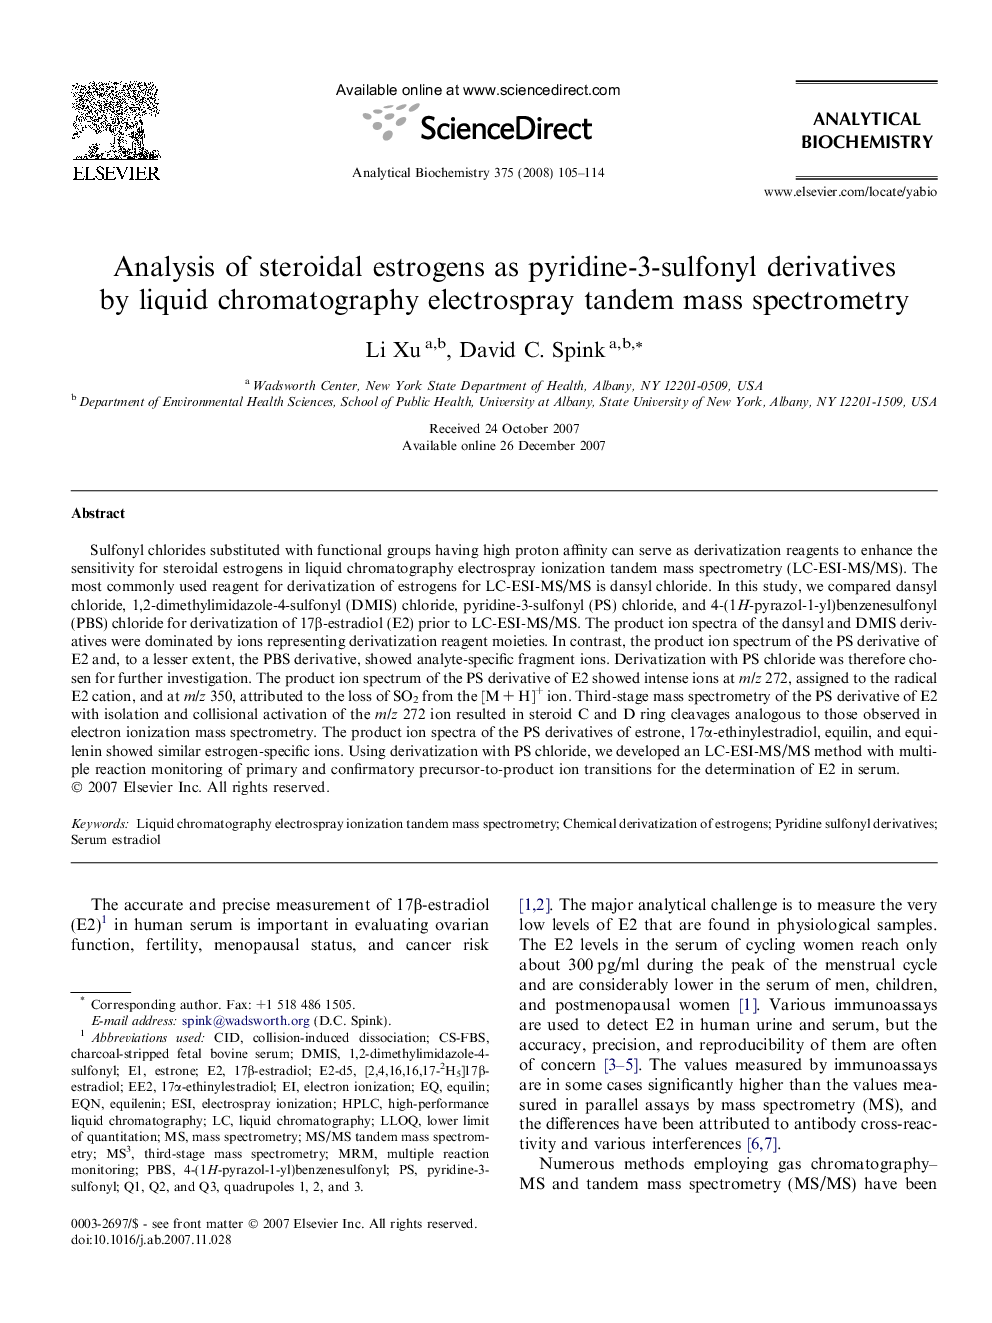 Analysis of steroidal estrogens as pyridine-3-sulfonyl derivatives by liquid chromatography electrospray tandem mass spectrometry